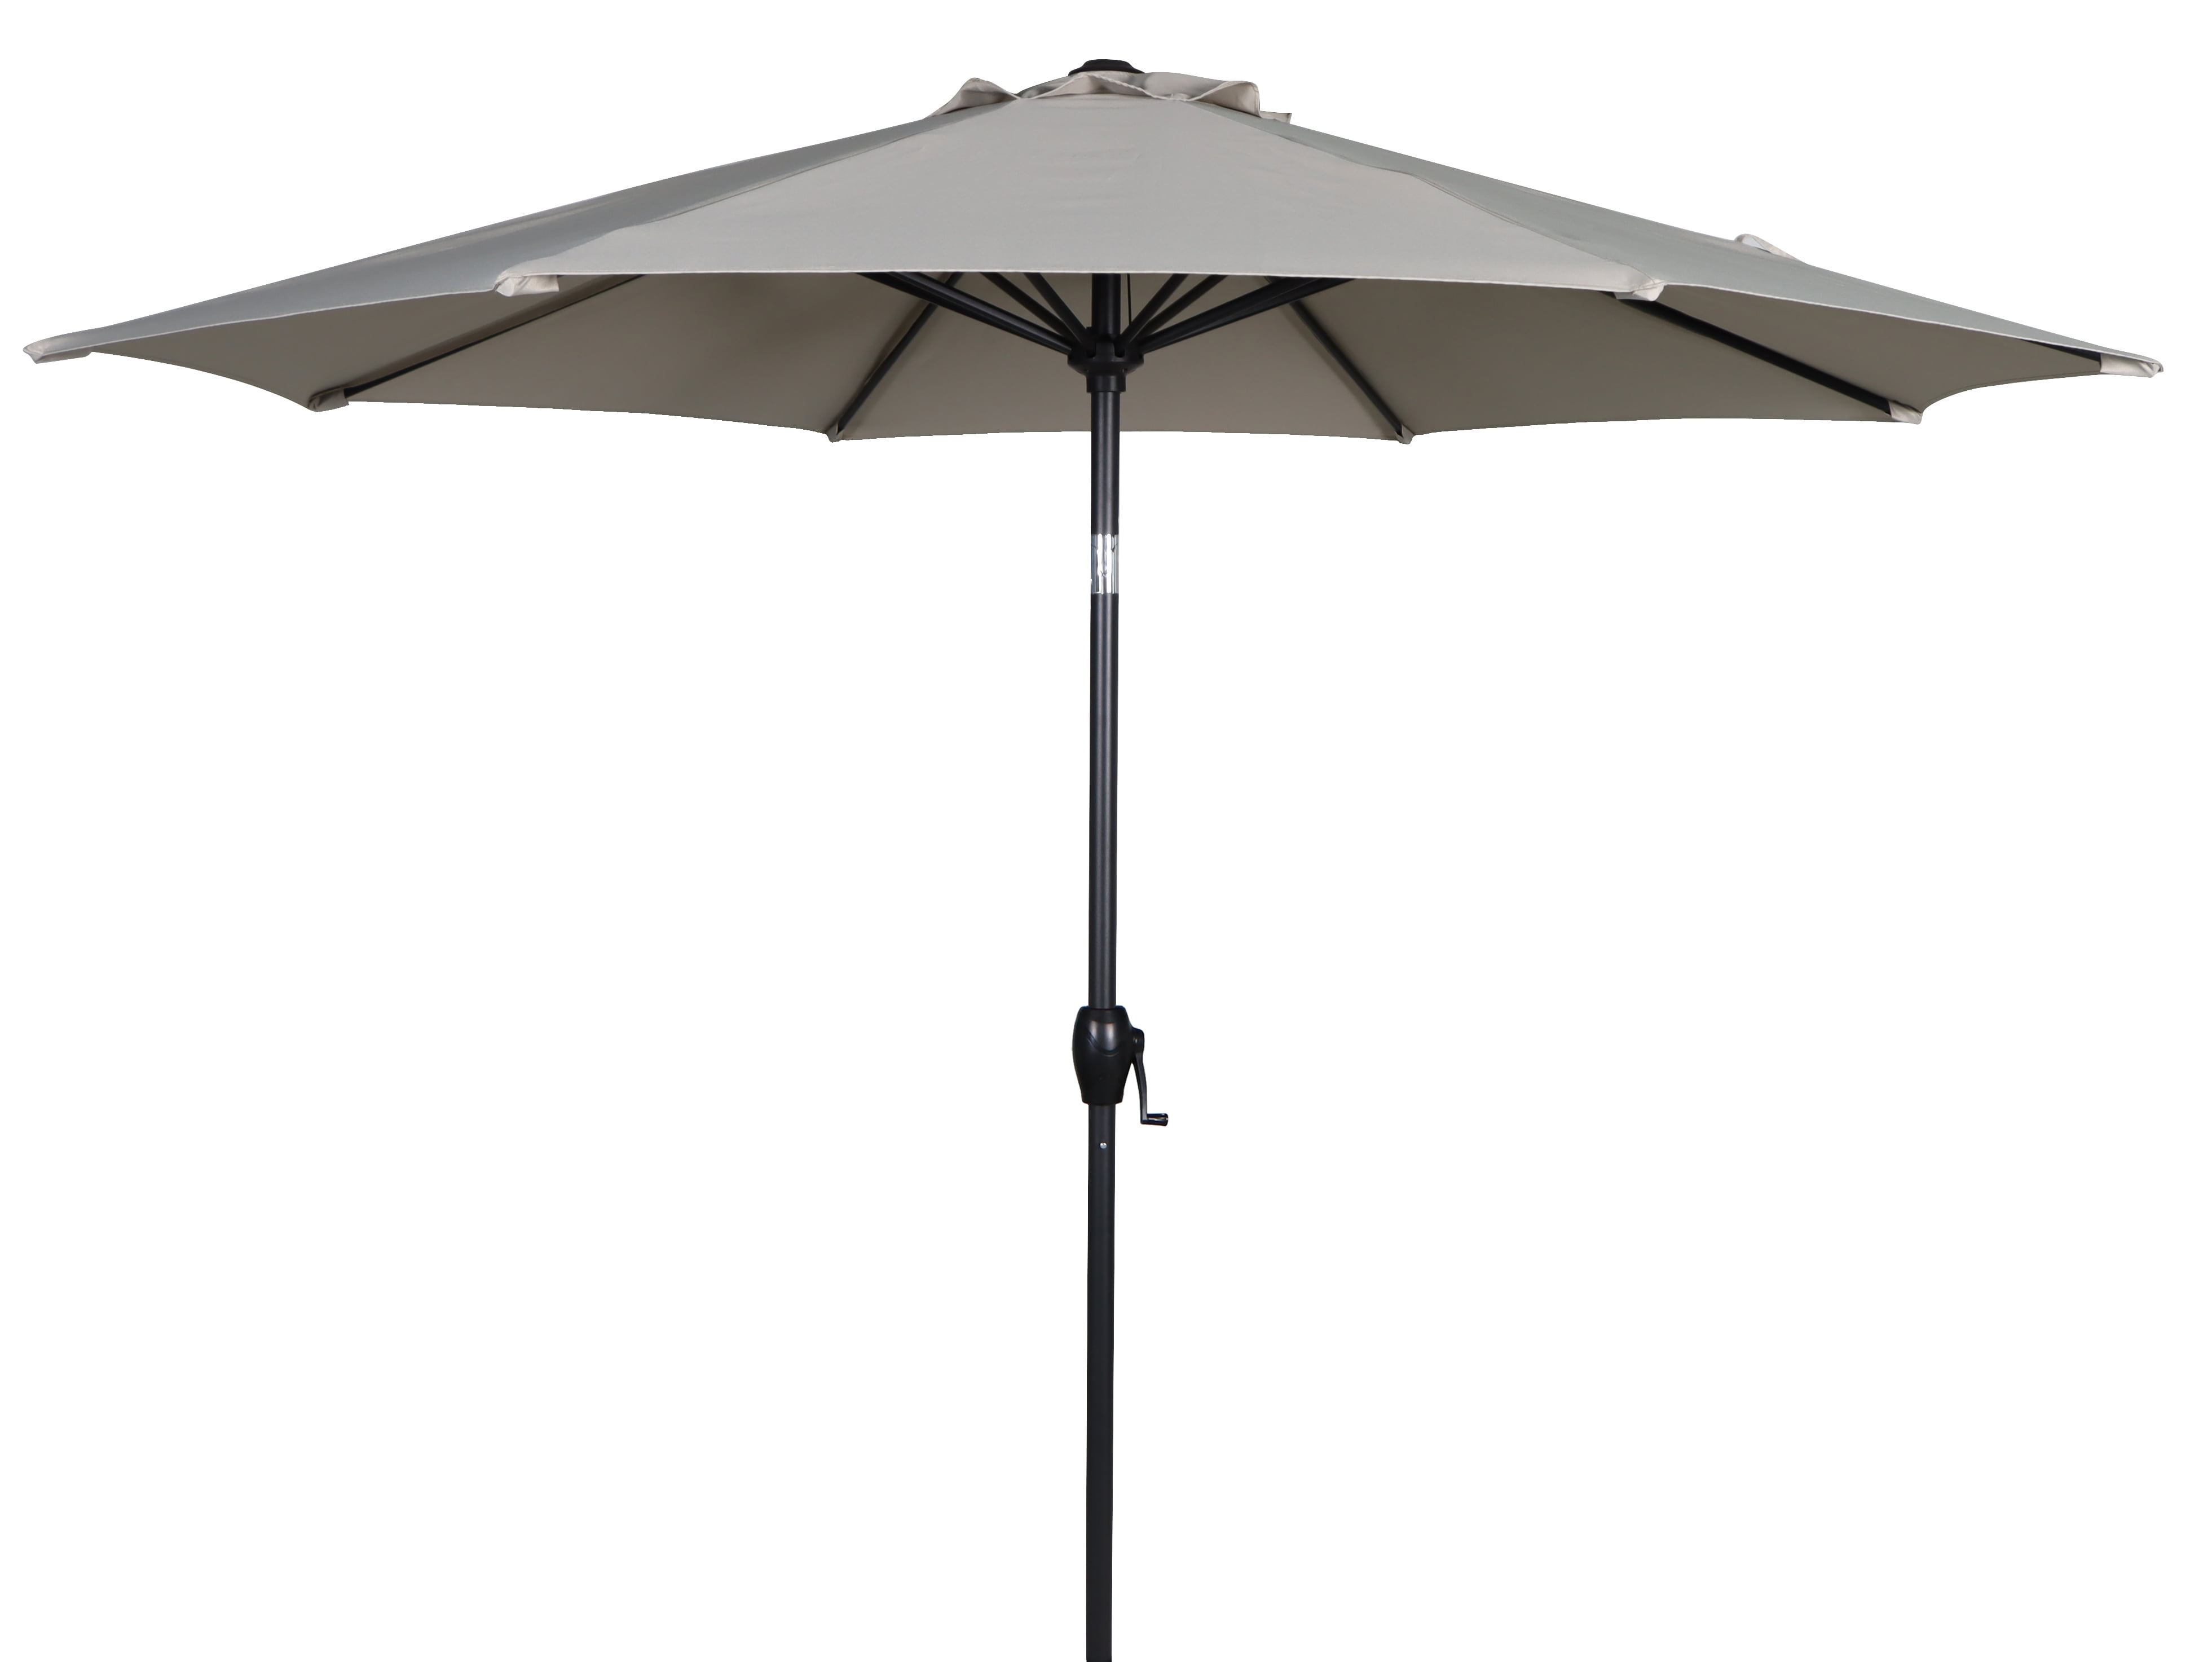 Mainstays 9ft Stone Round Outdoor Tilting Market Patio Umbrella with Crank